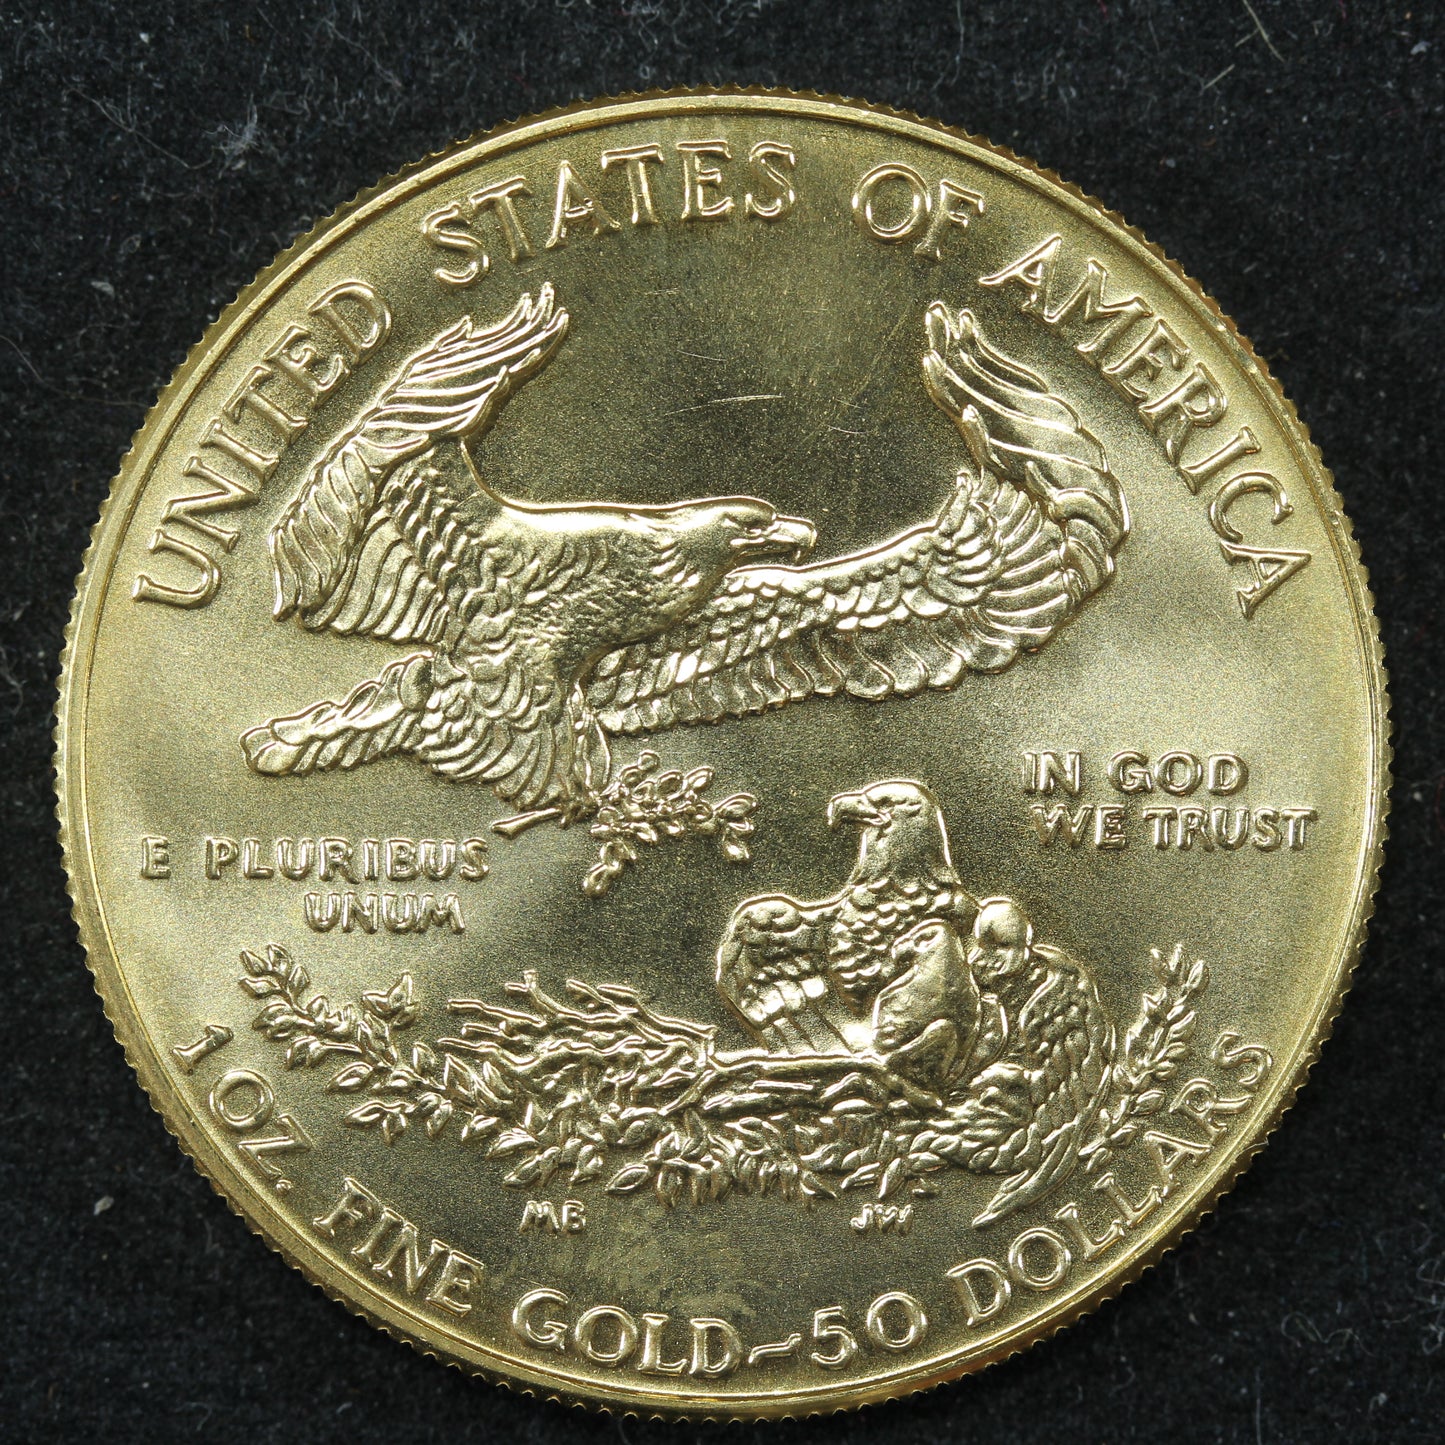 1990 $50 1 oz Gold American Eagle - BU Great Condition